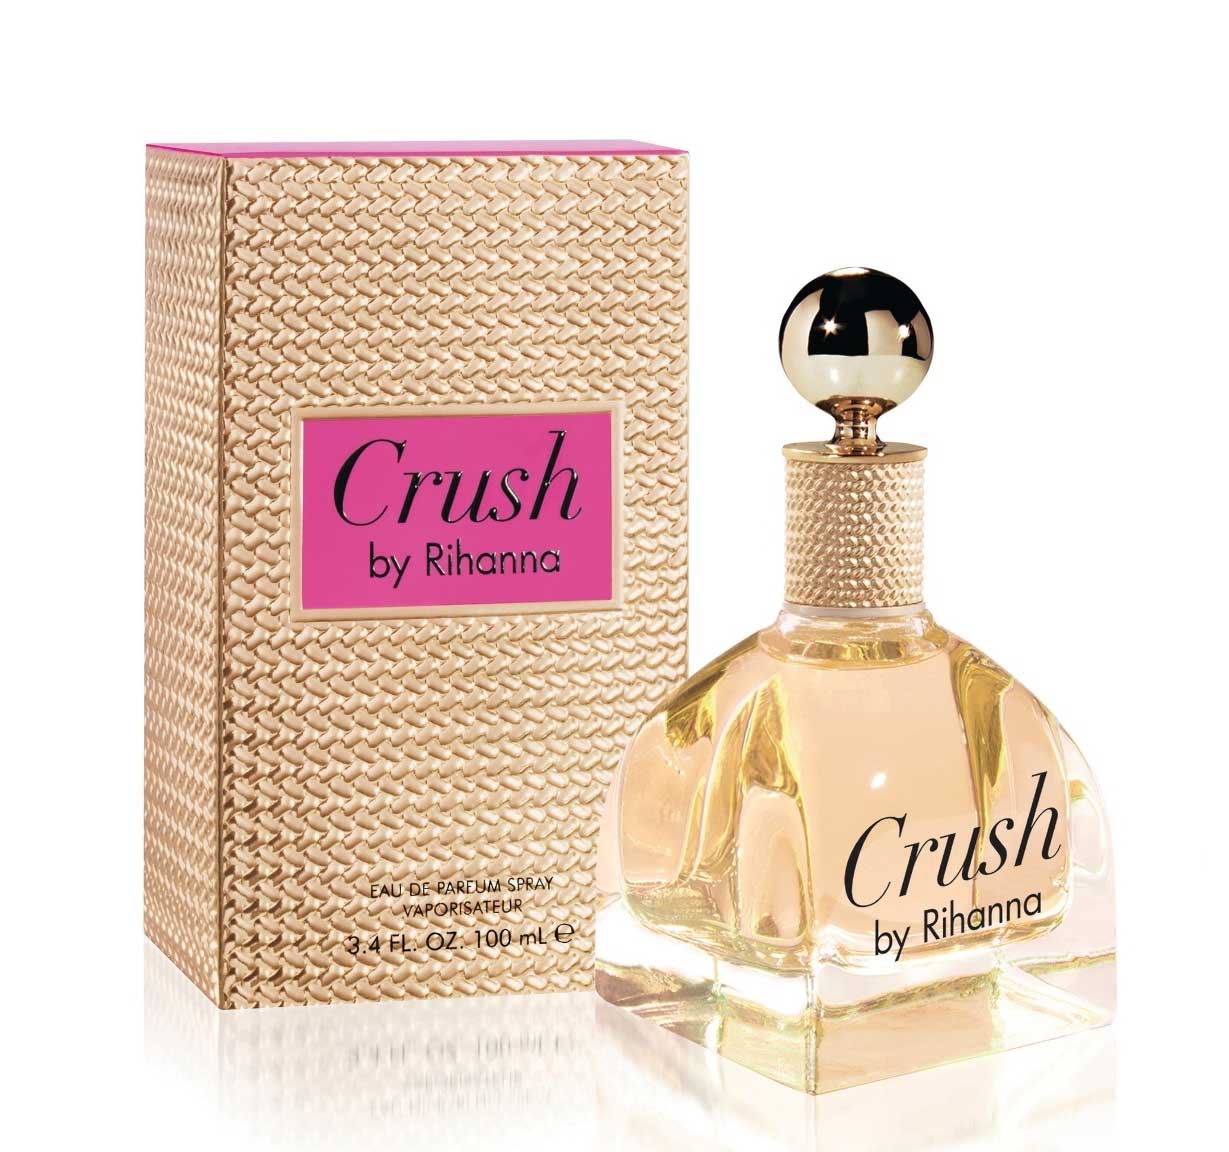 Crush Rihanna Parfum - A New Perfume for Women 2016